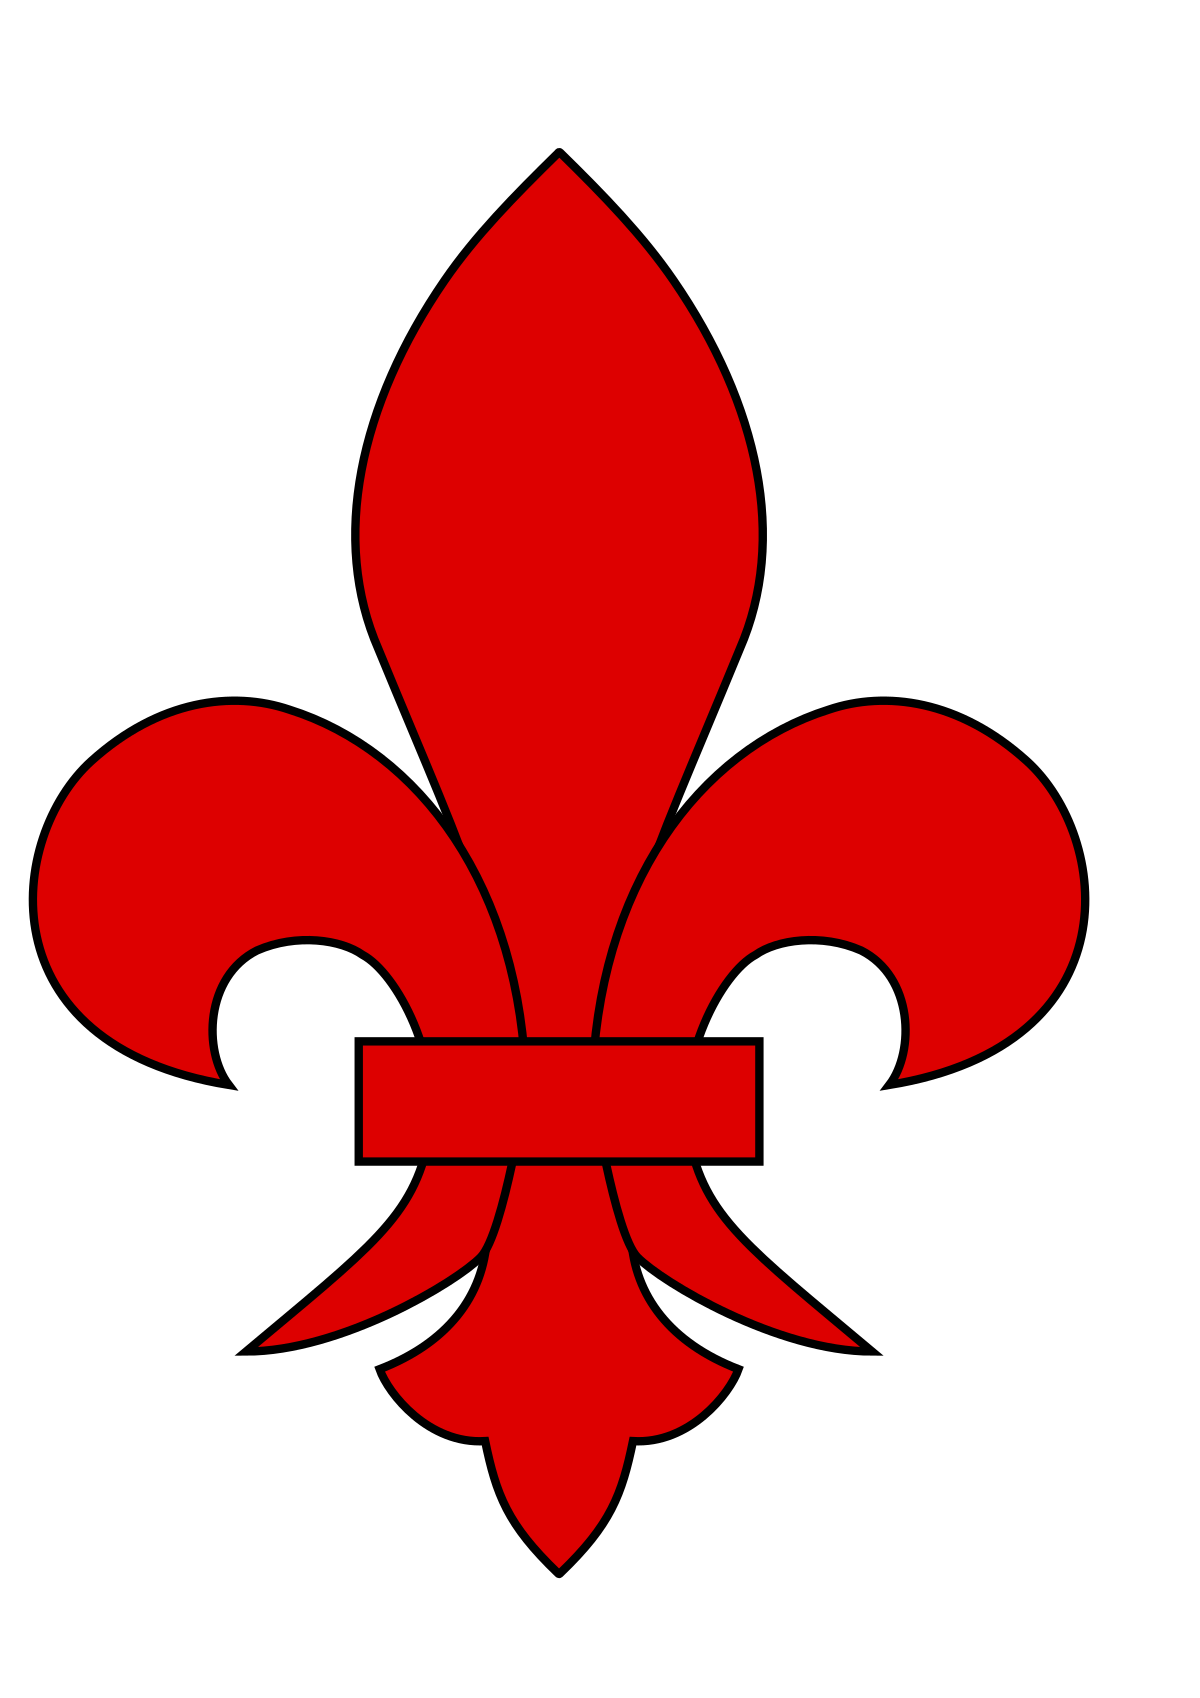 File:Fleur-de-lis-red.svg - Wikipedia